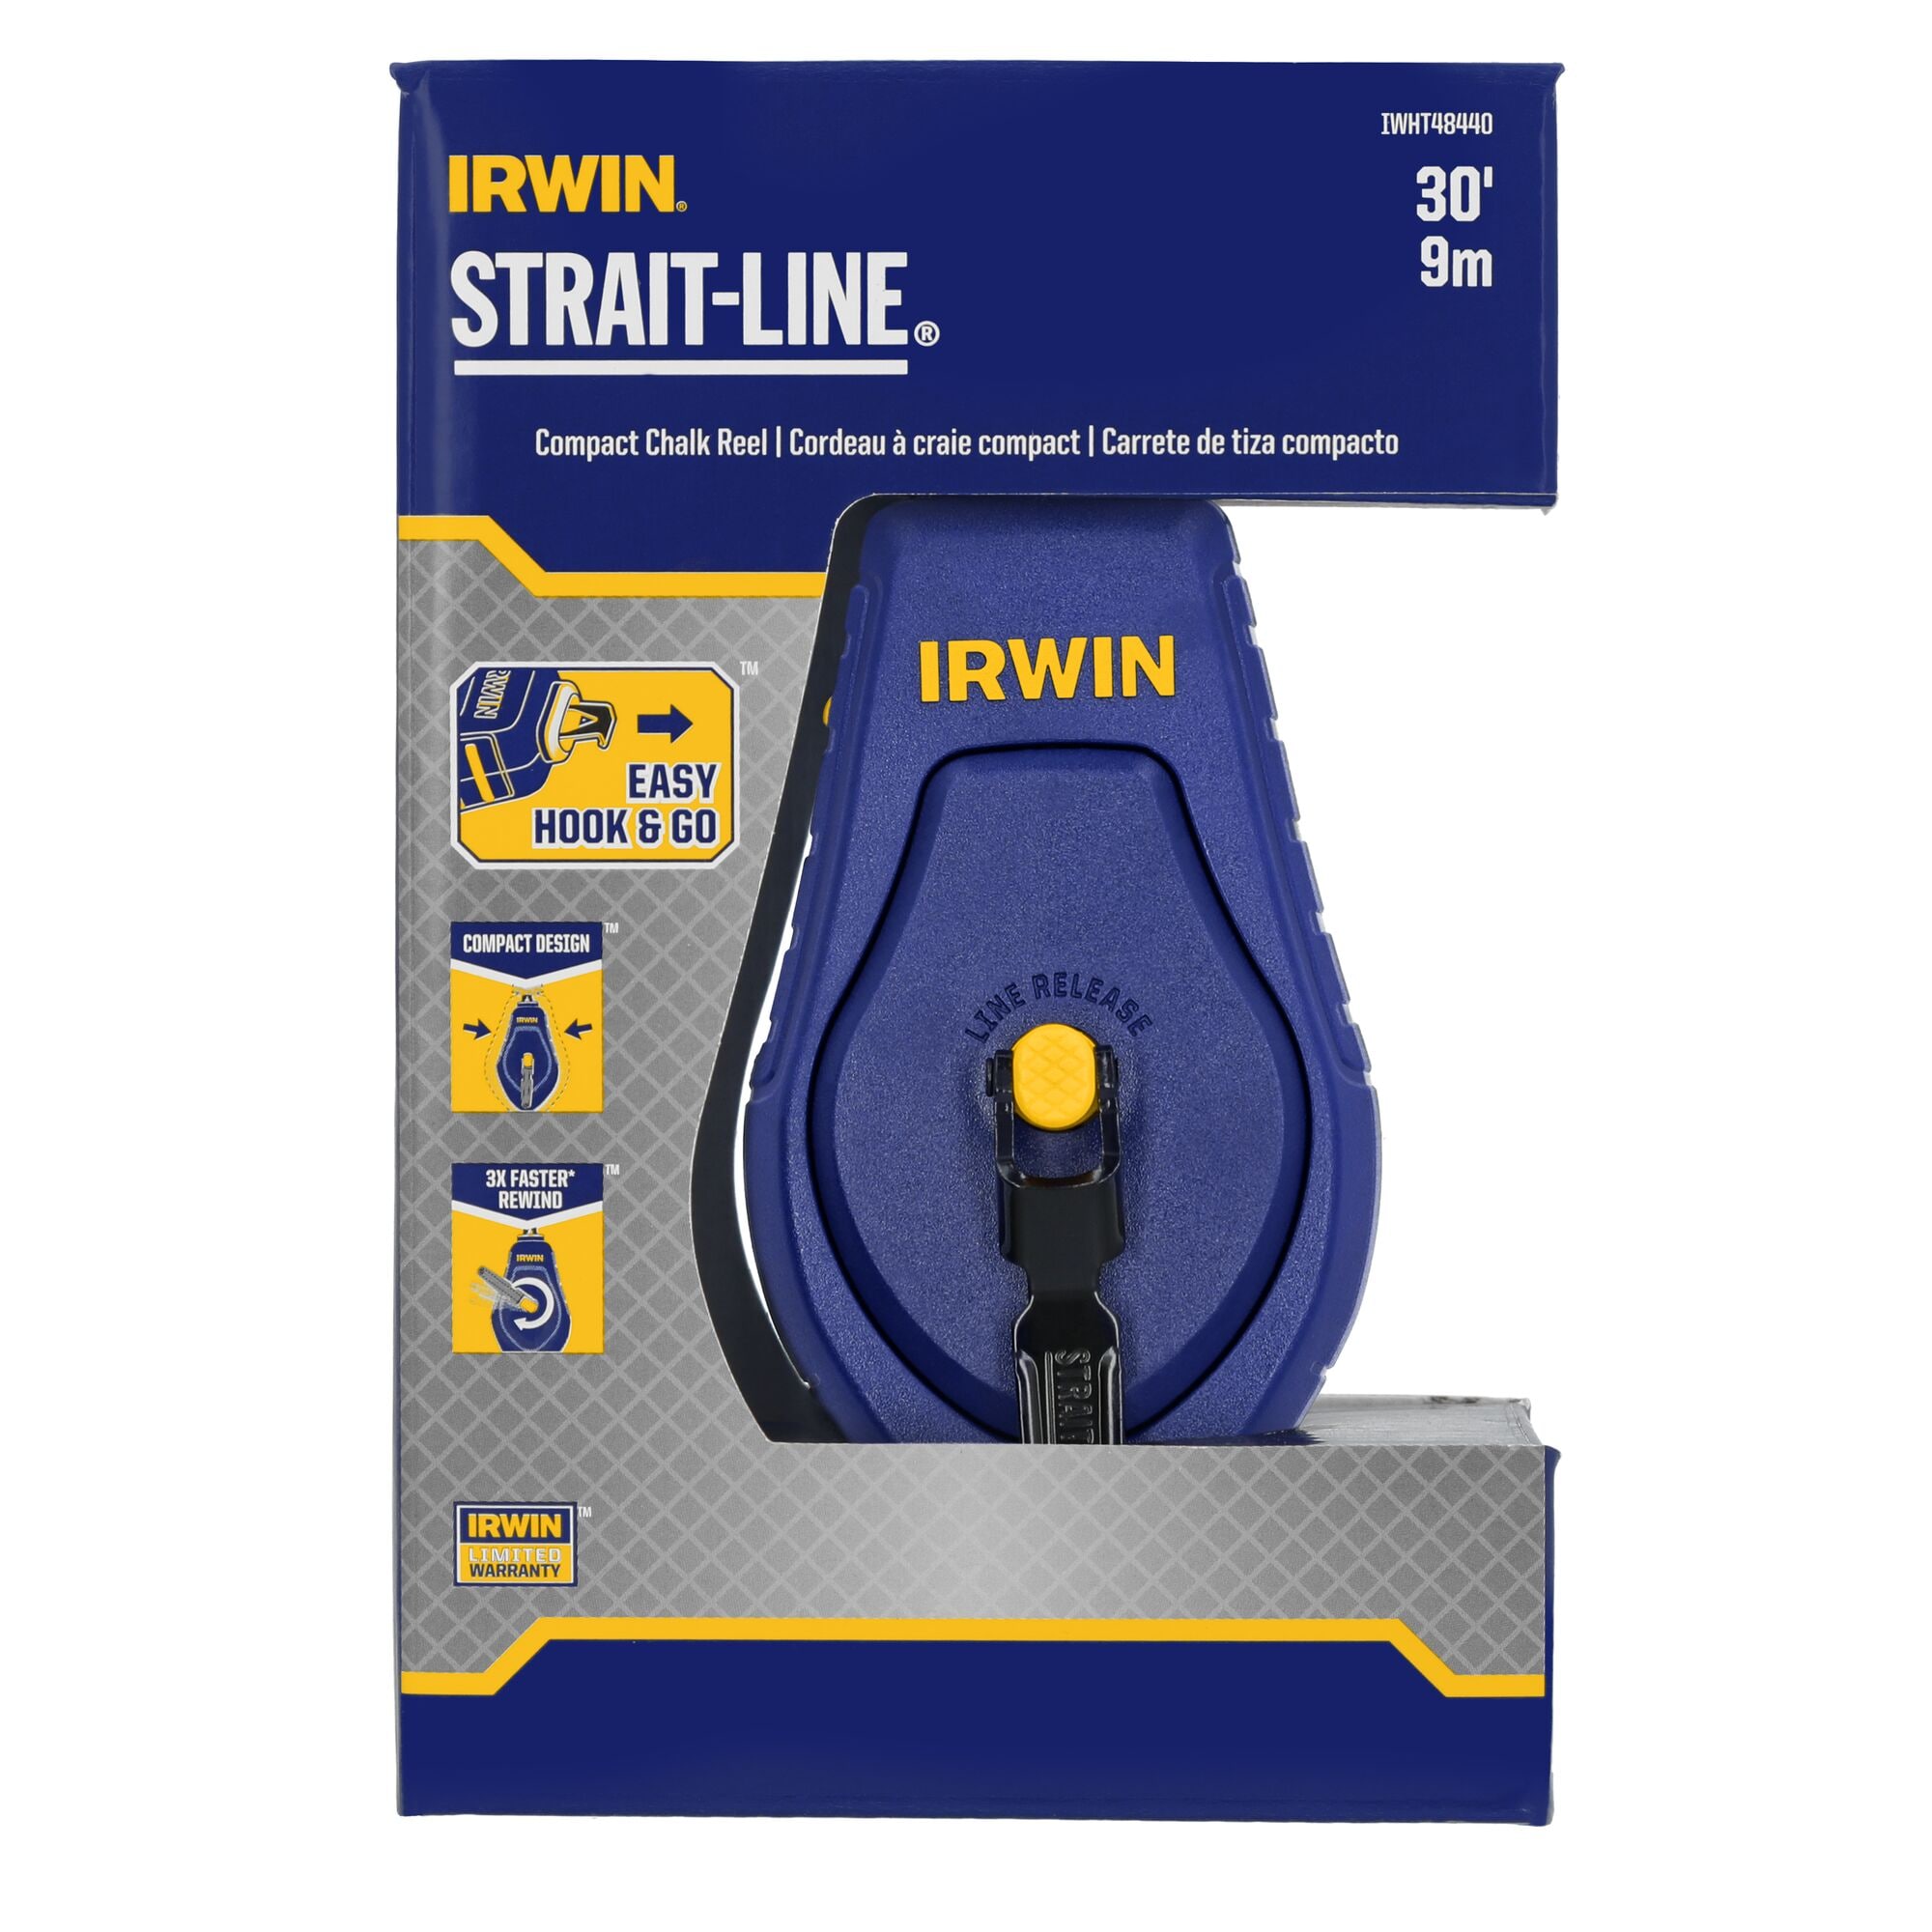 IRWIN Strait-Line Compact 3:1 30-ft Chalk Reel in the Chalk Reels 